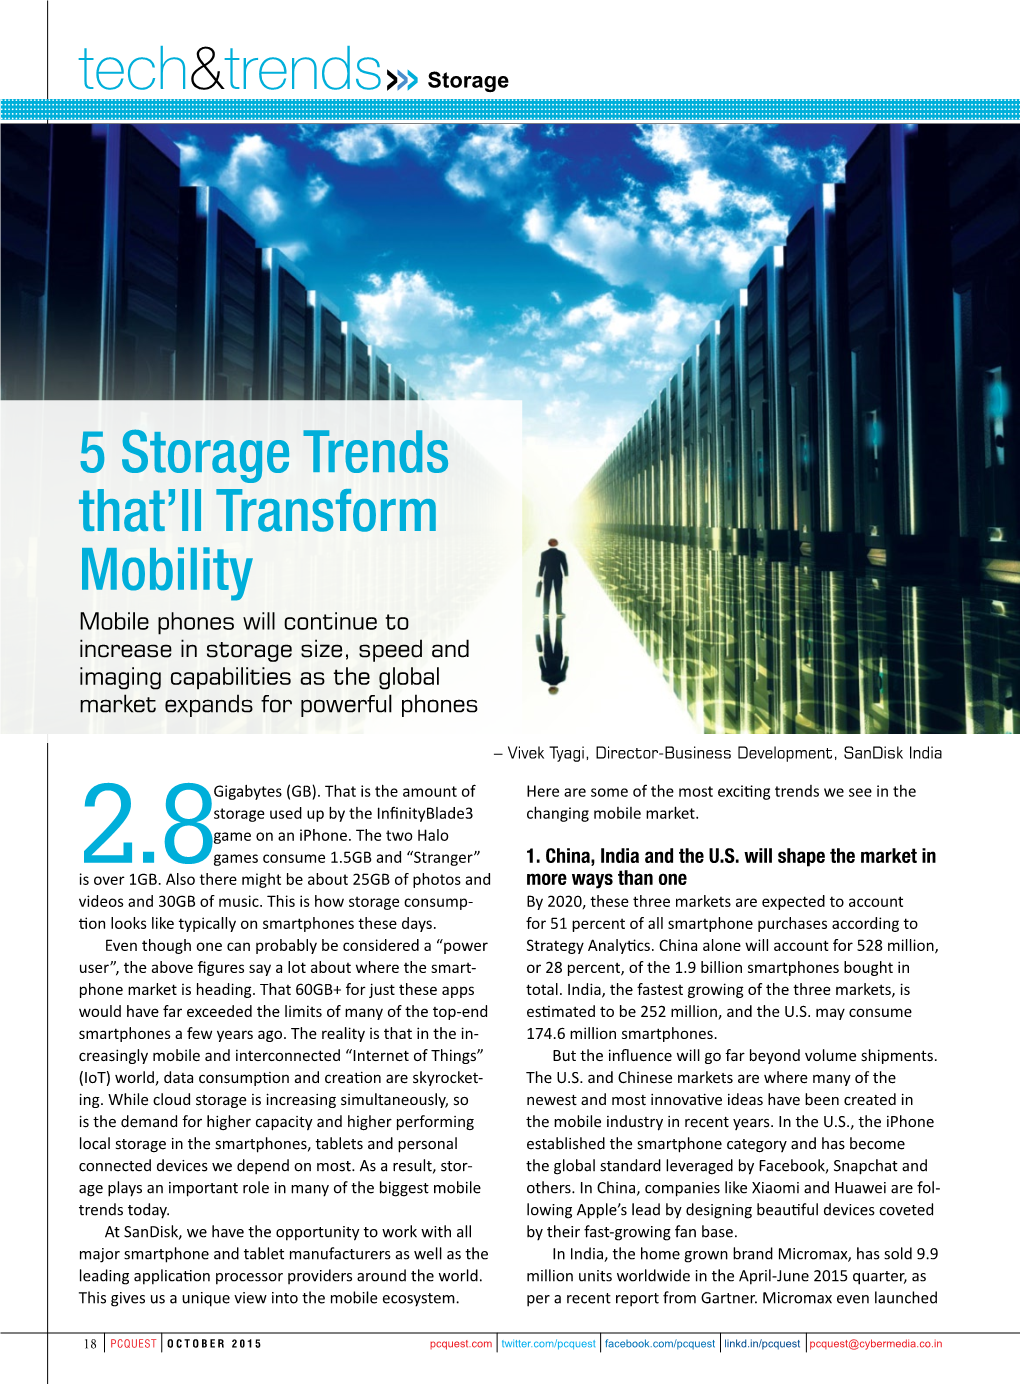 5 Storage Trends That'll Transform Mobiltiy